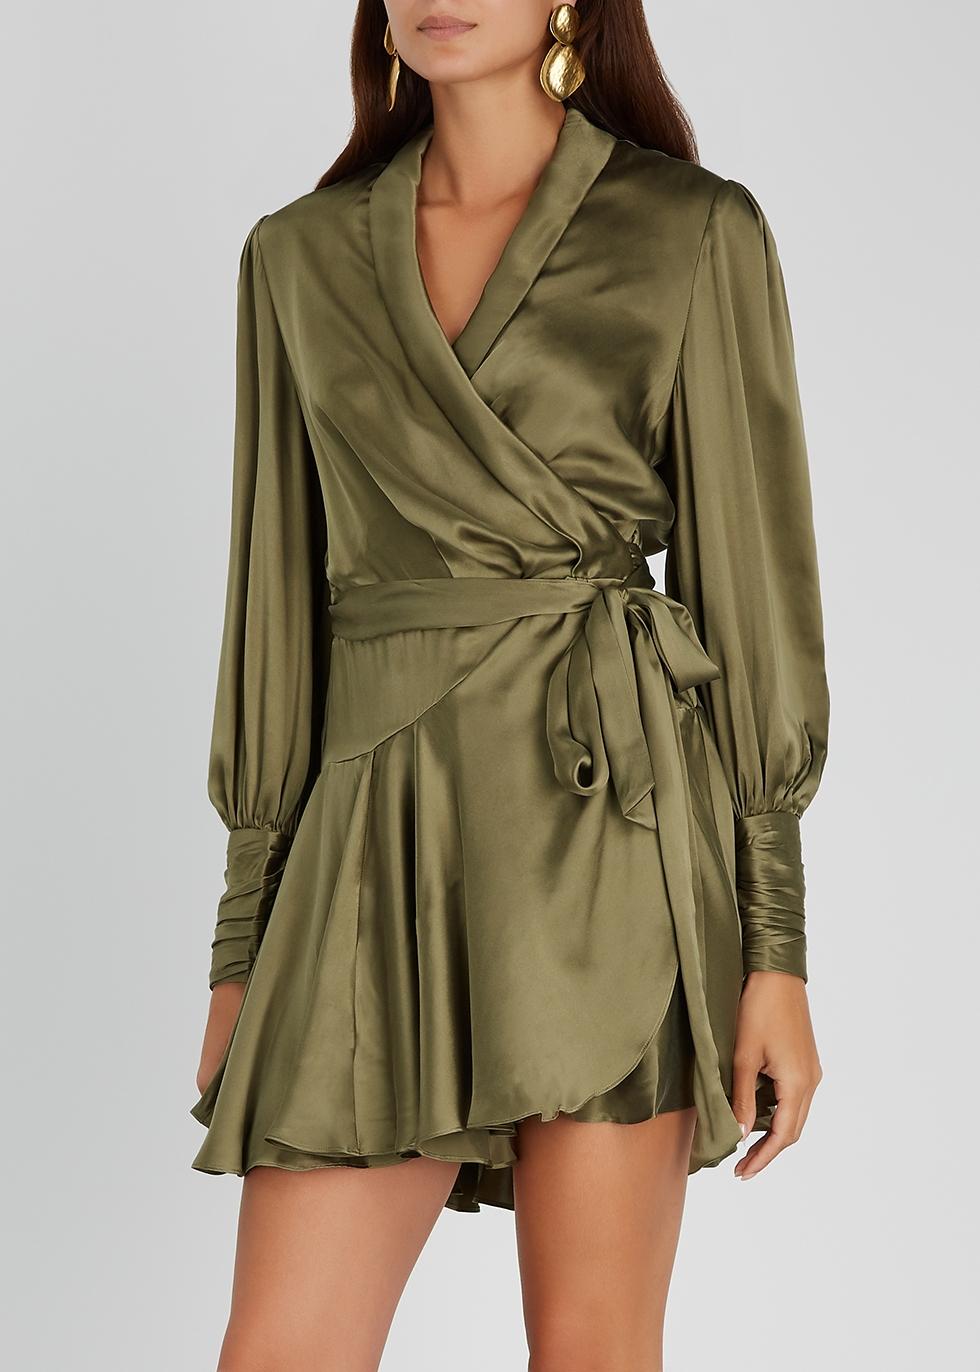 Zimmermann Olive Silk-satin Wrap Dress in Light Green (Green) | Lyst